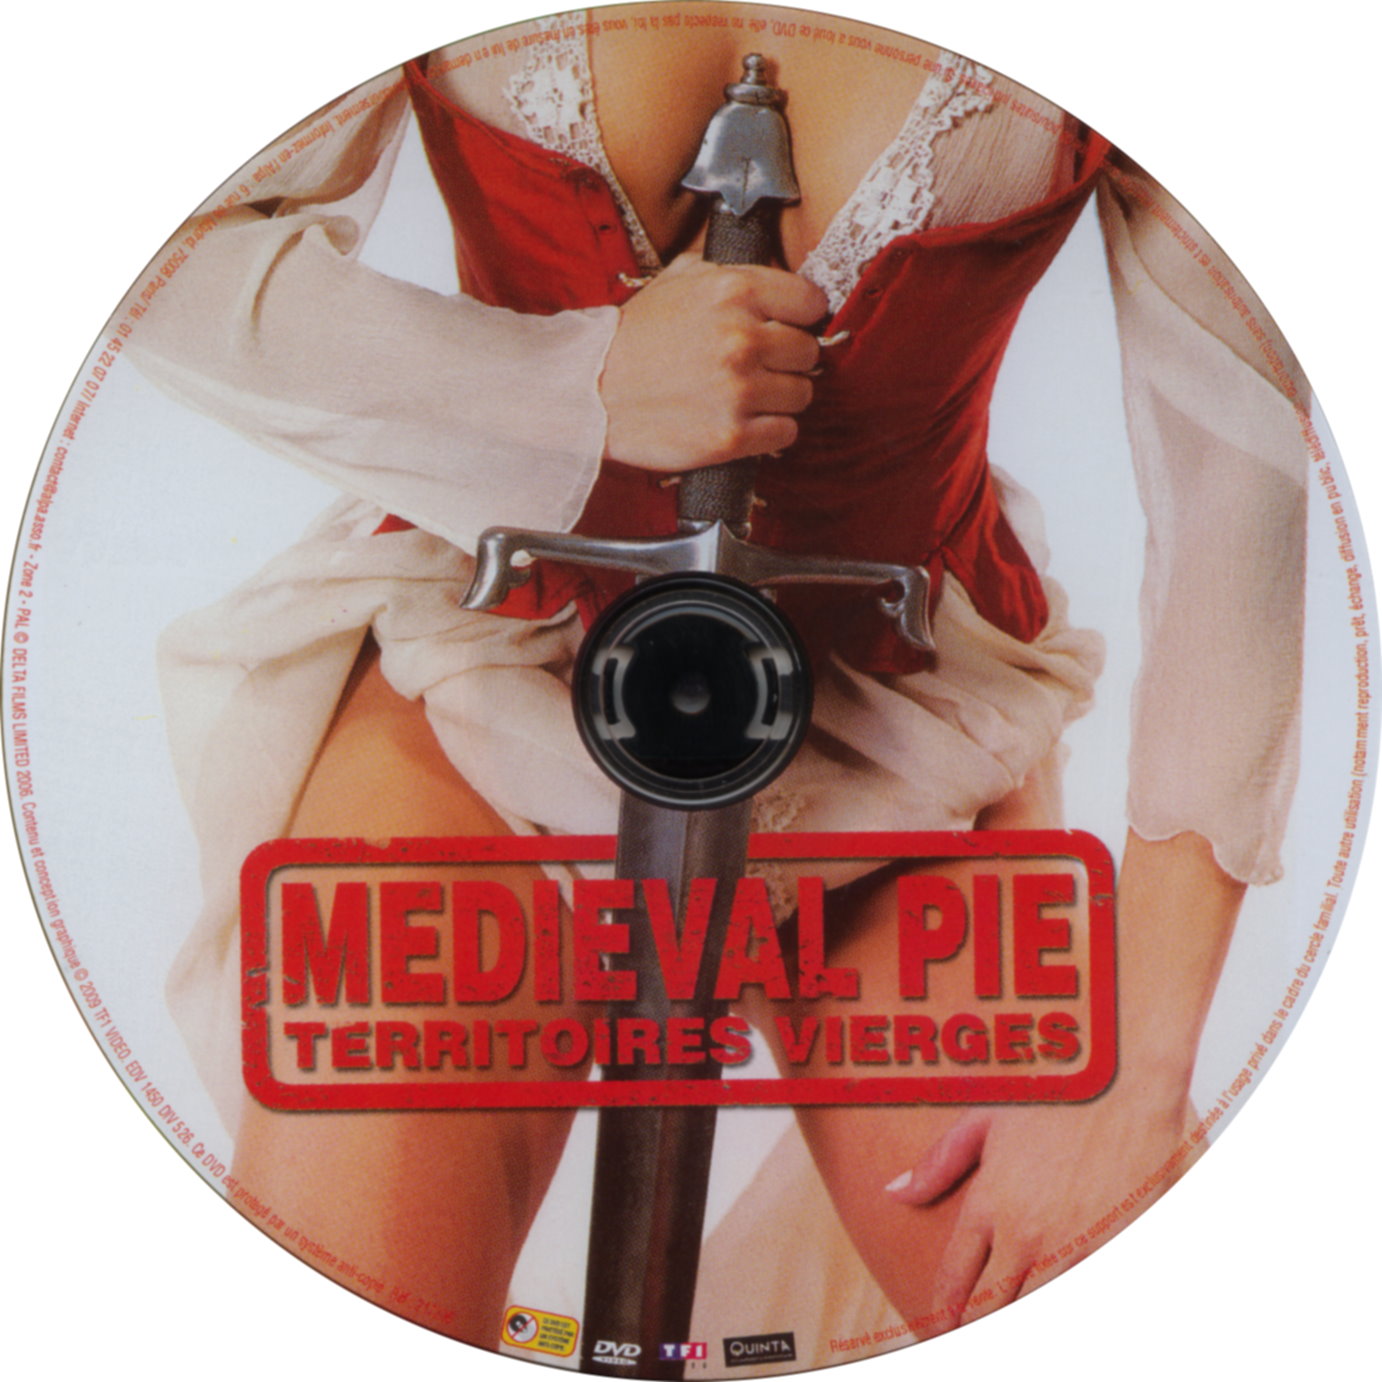 Medieval pie